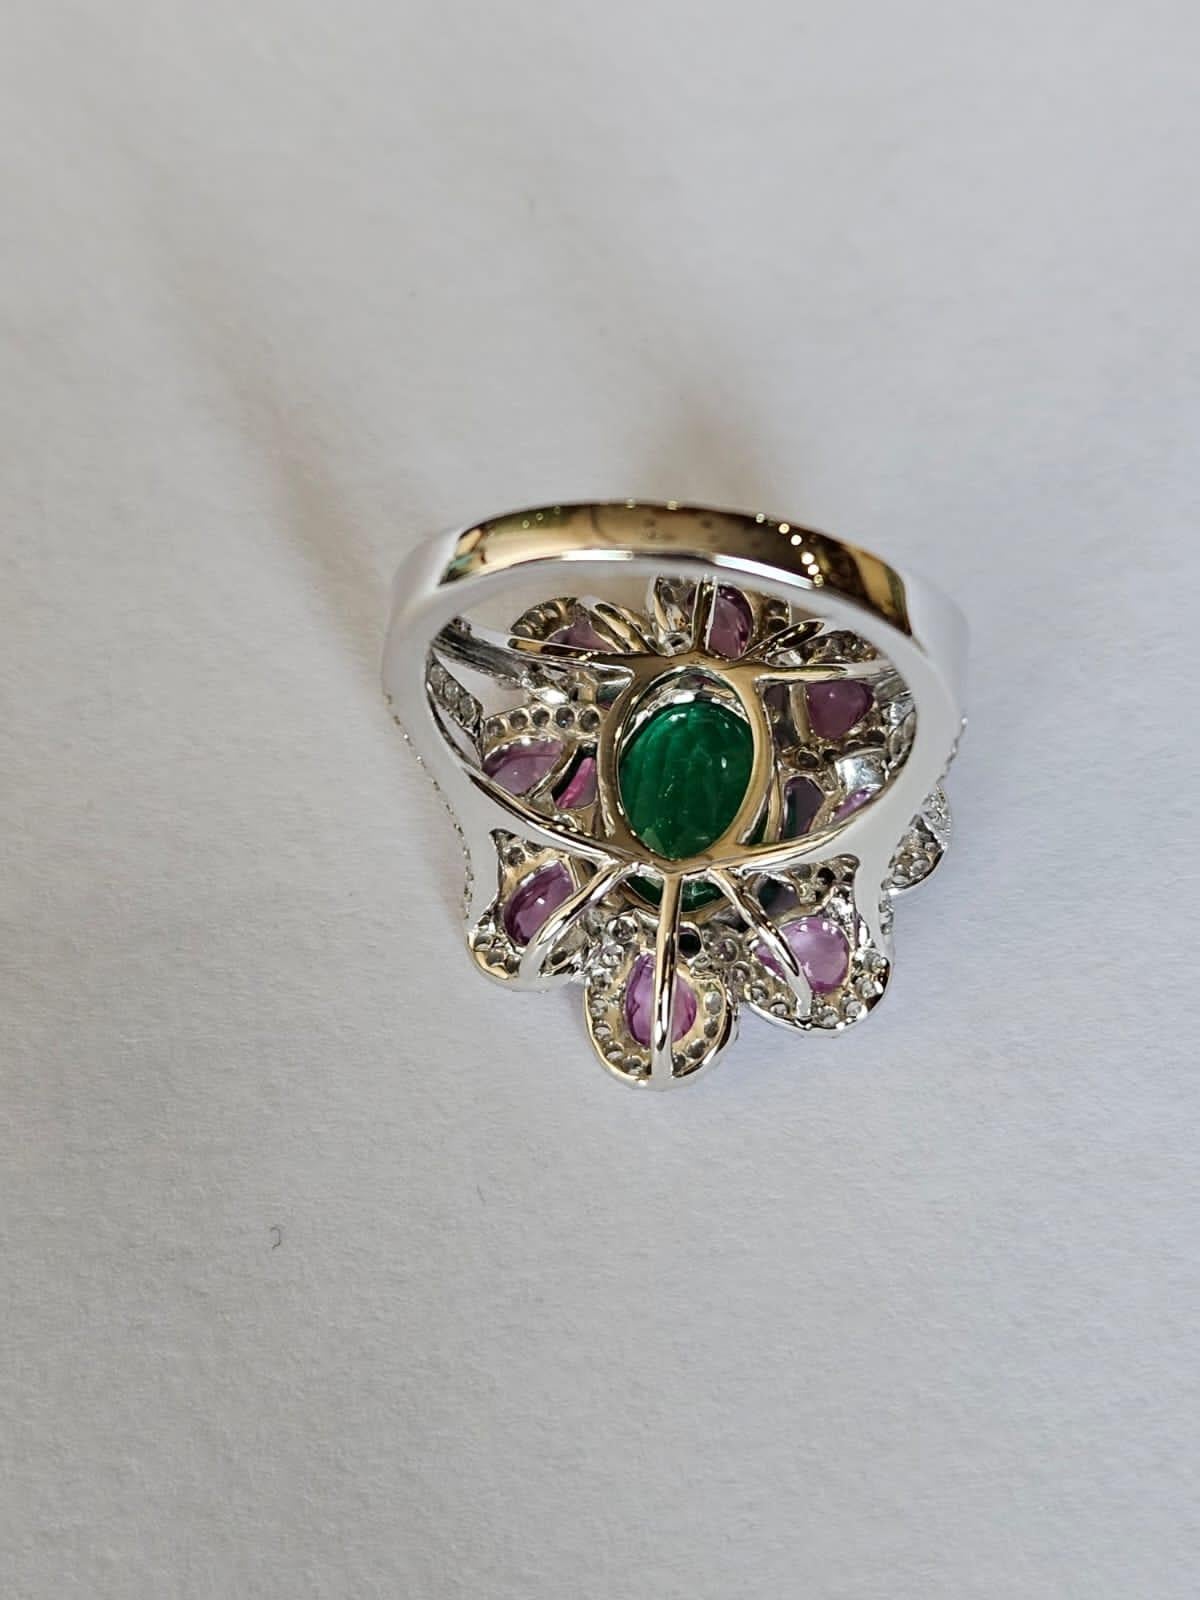 Modern Set in 18K Gold, natural Zambian Emerald, Pink Sapphire & Diamonds Cocktail Ring